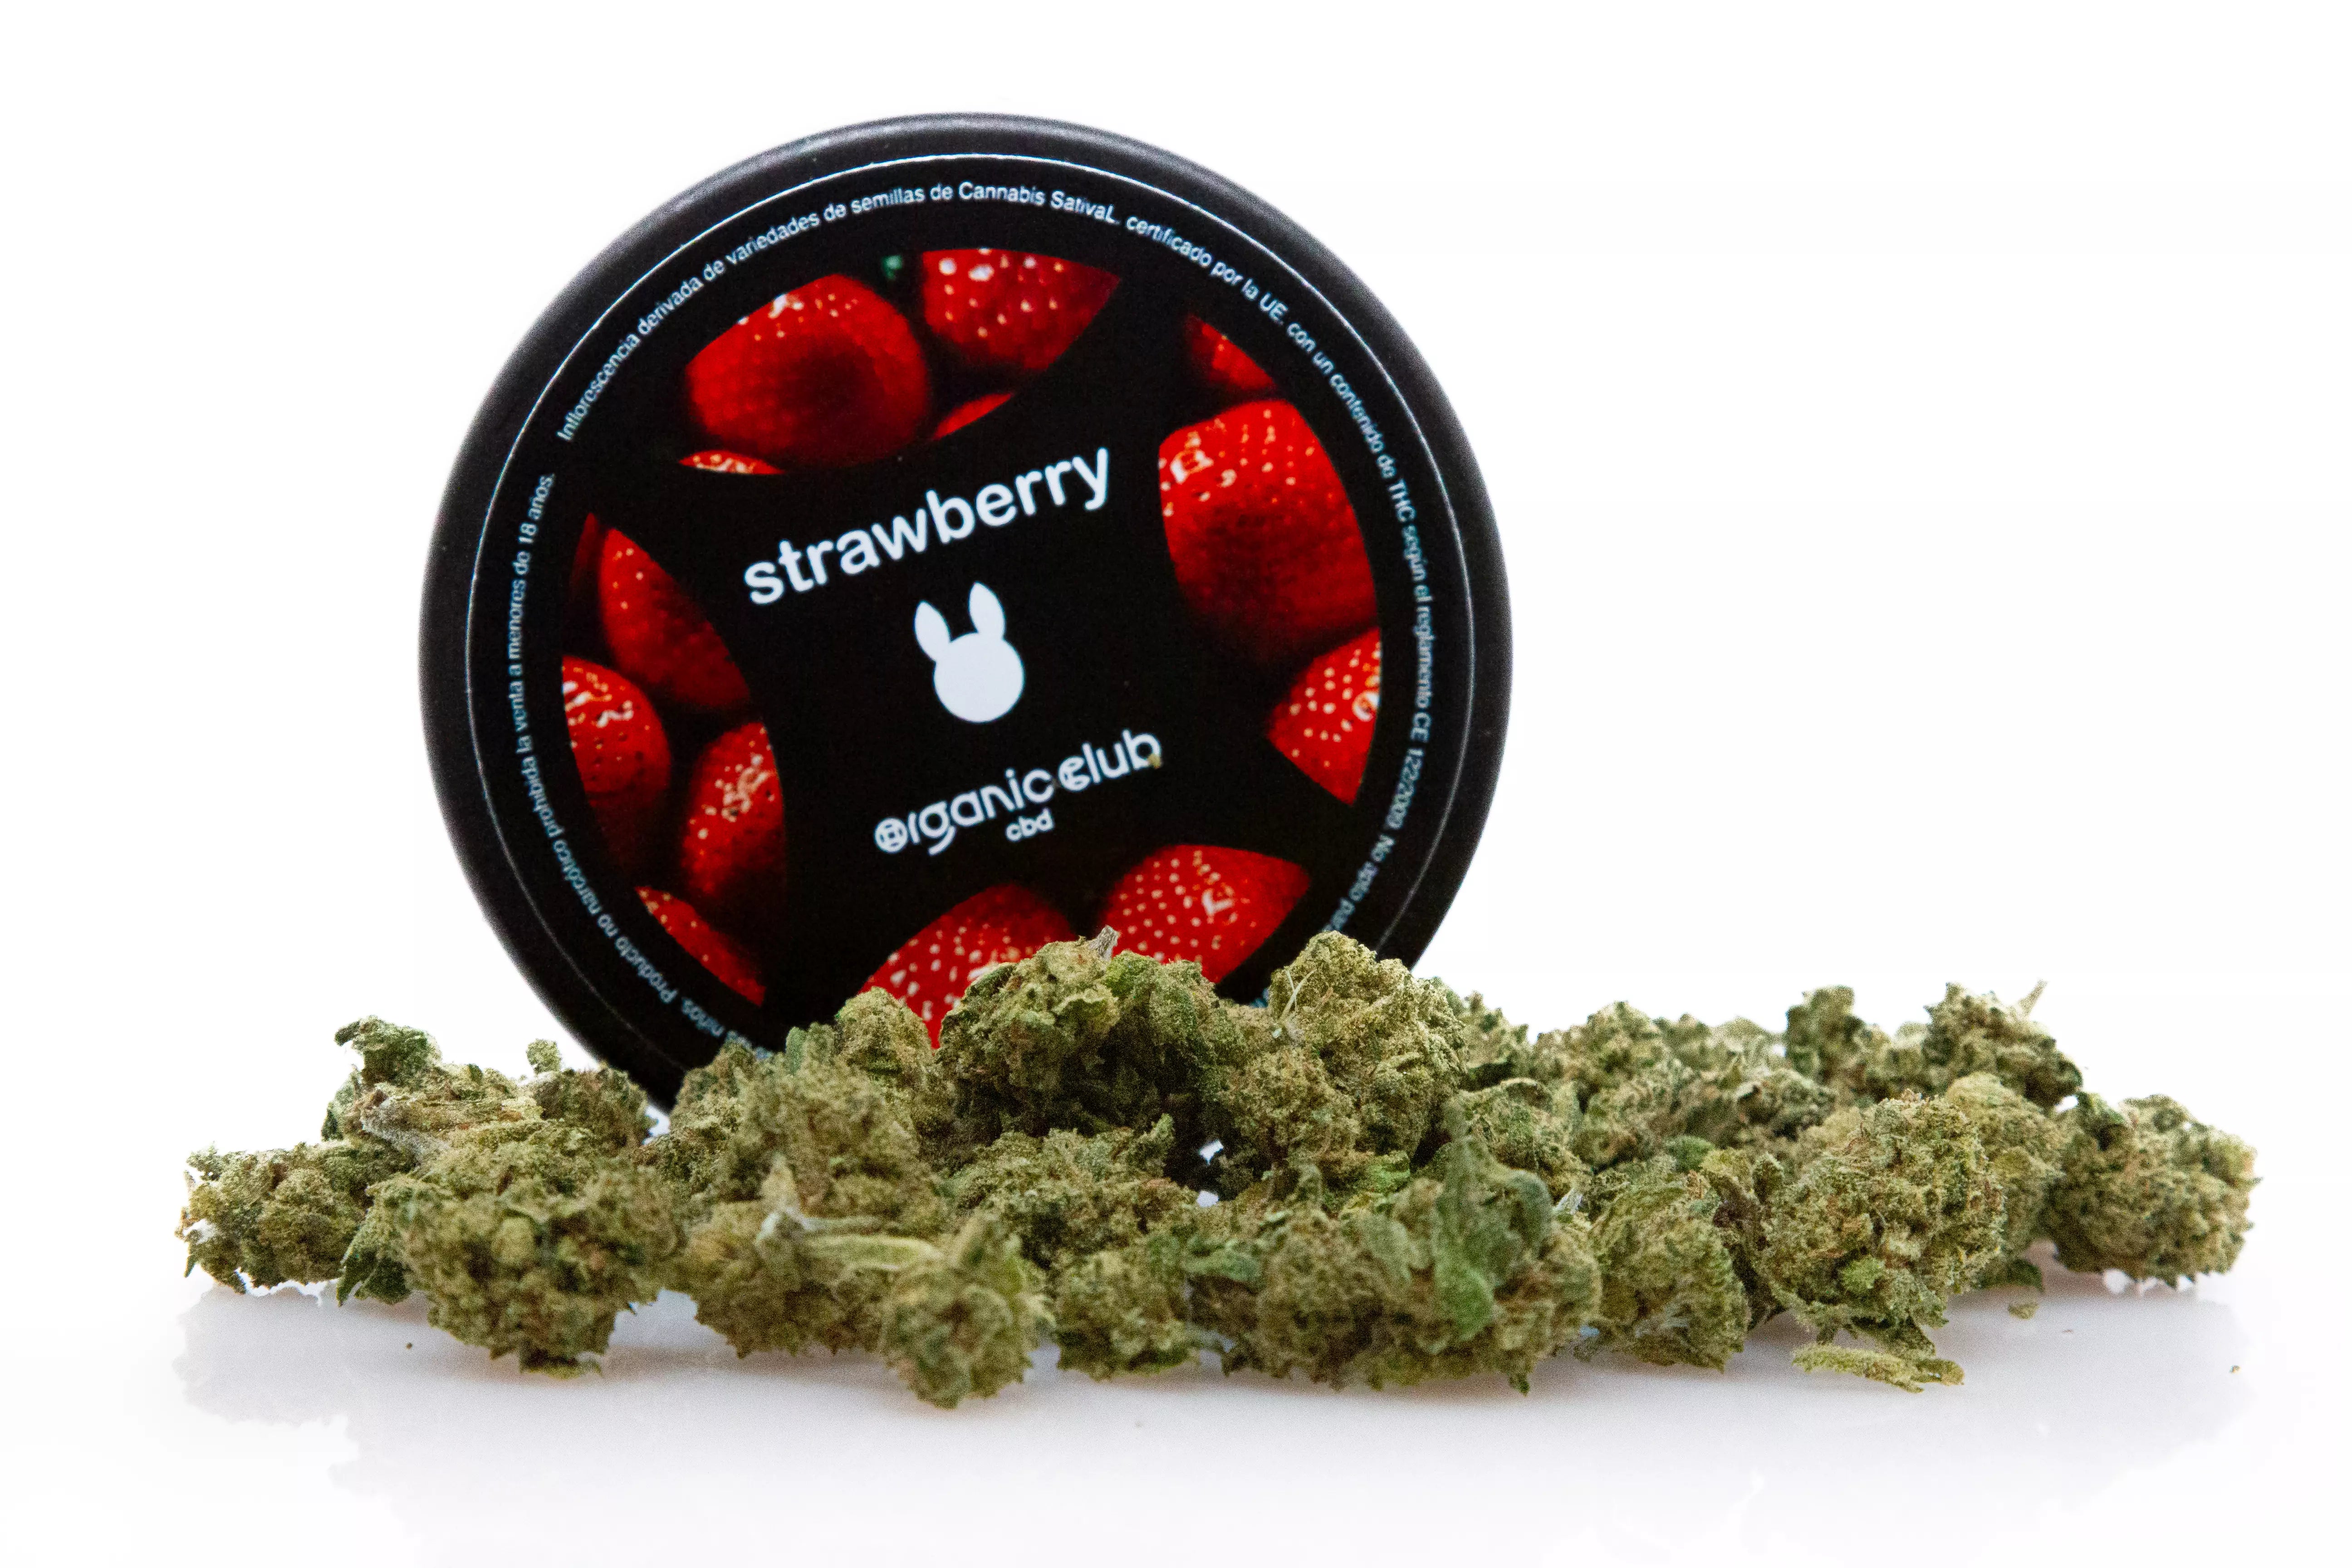 Strawberry - Small buds